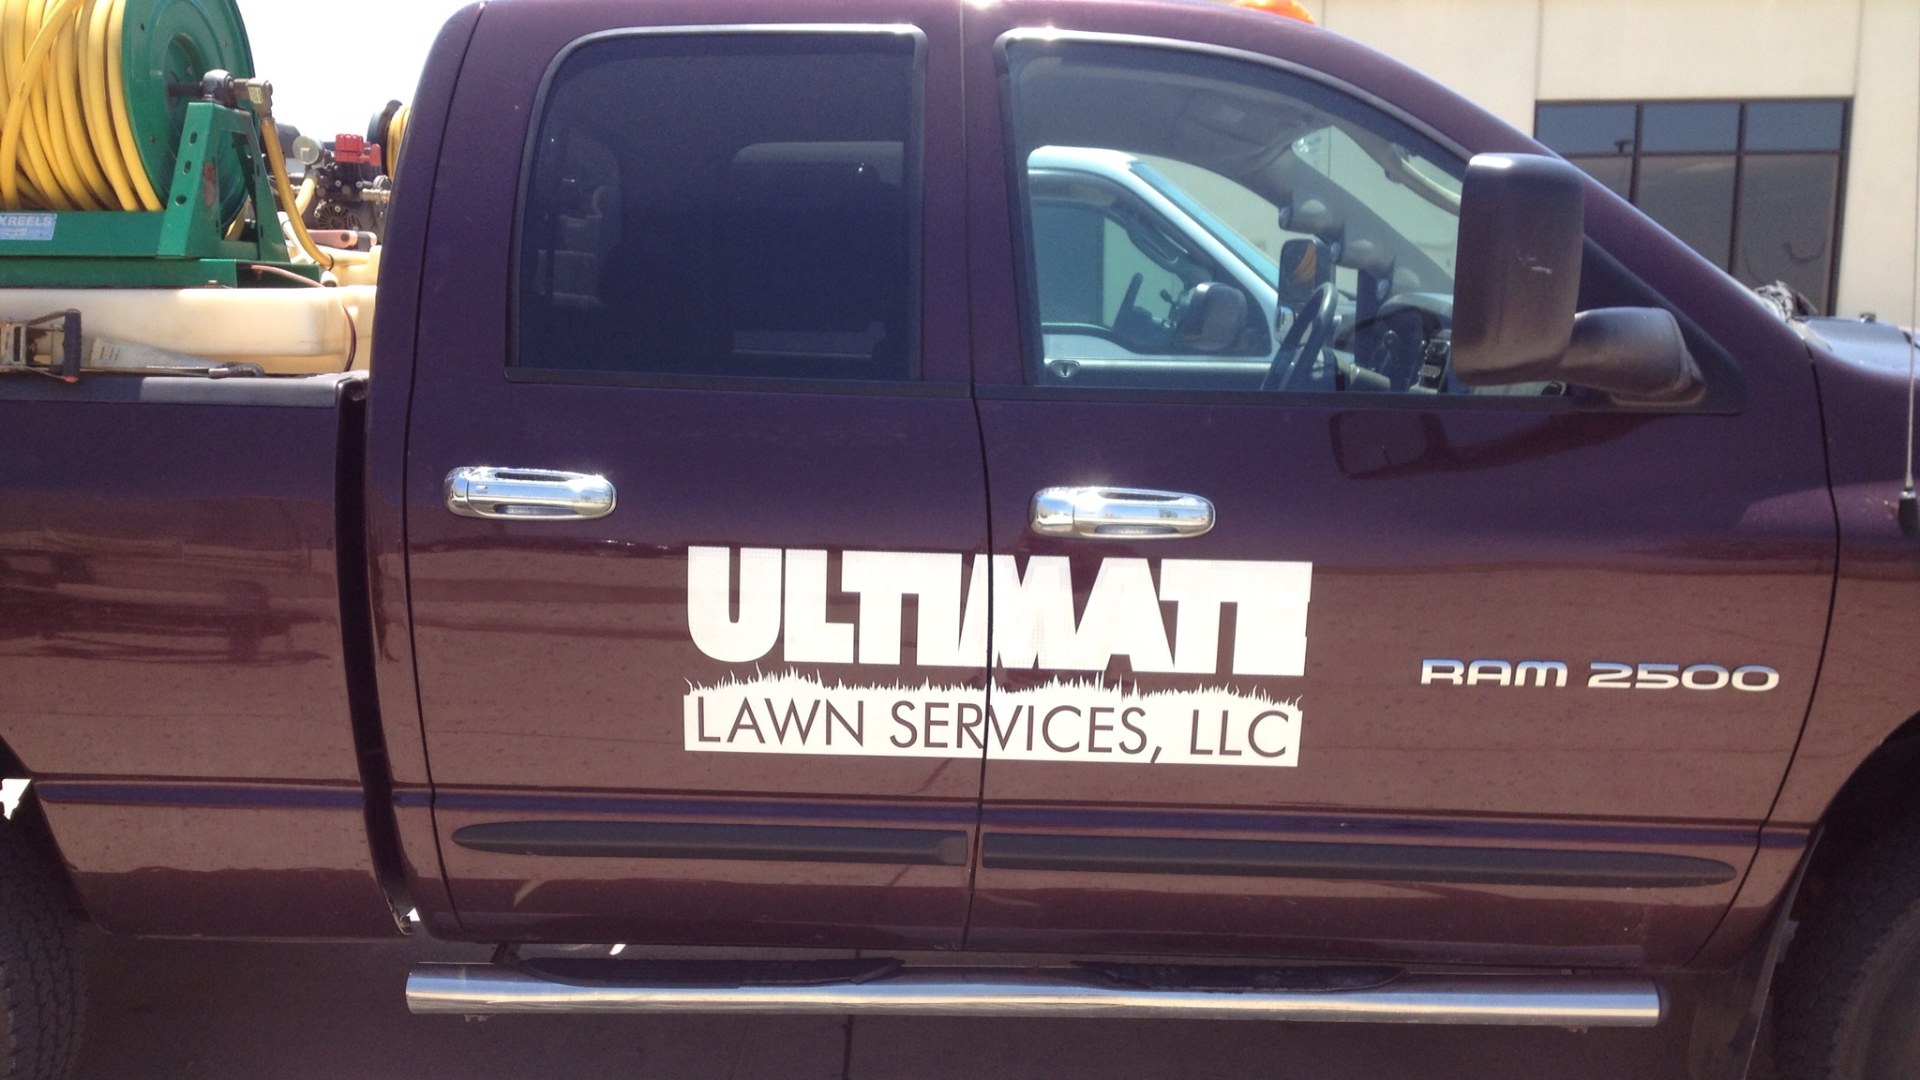 Ultimate work truck with logo on doorside in Urbandale, IA.